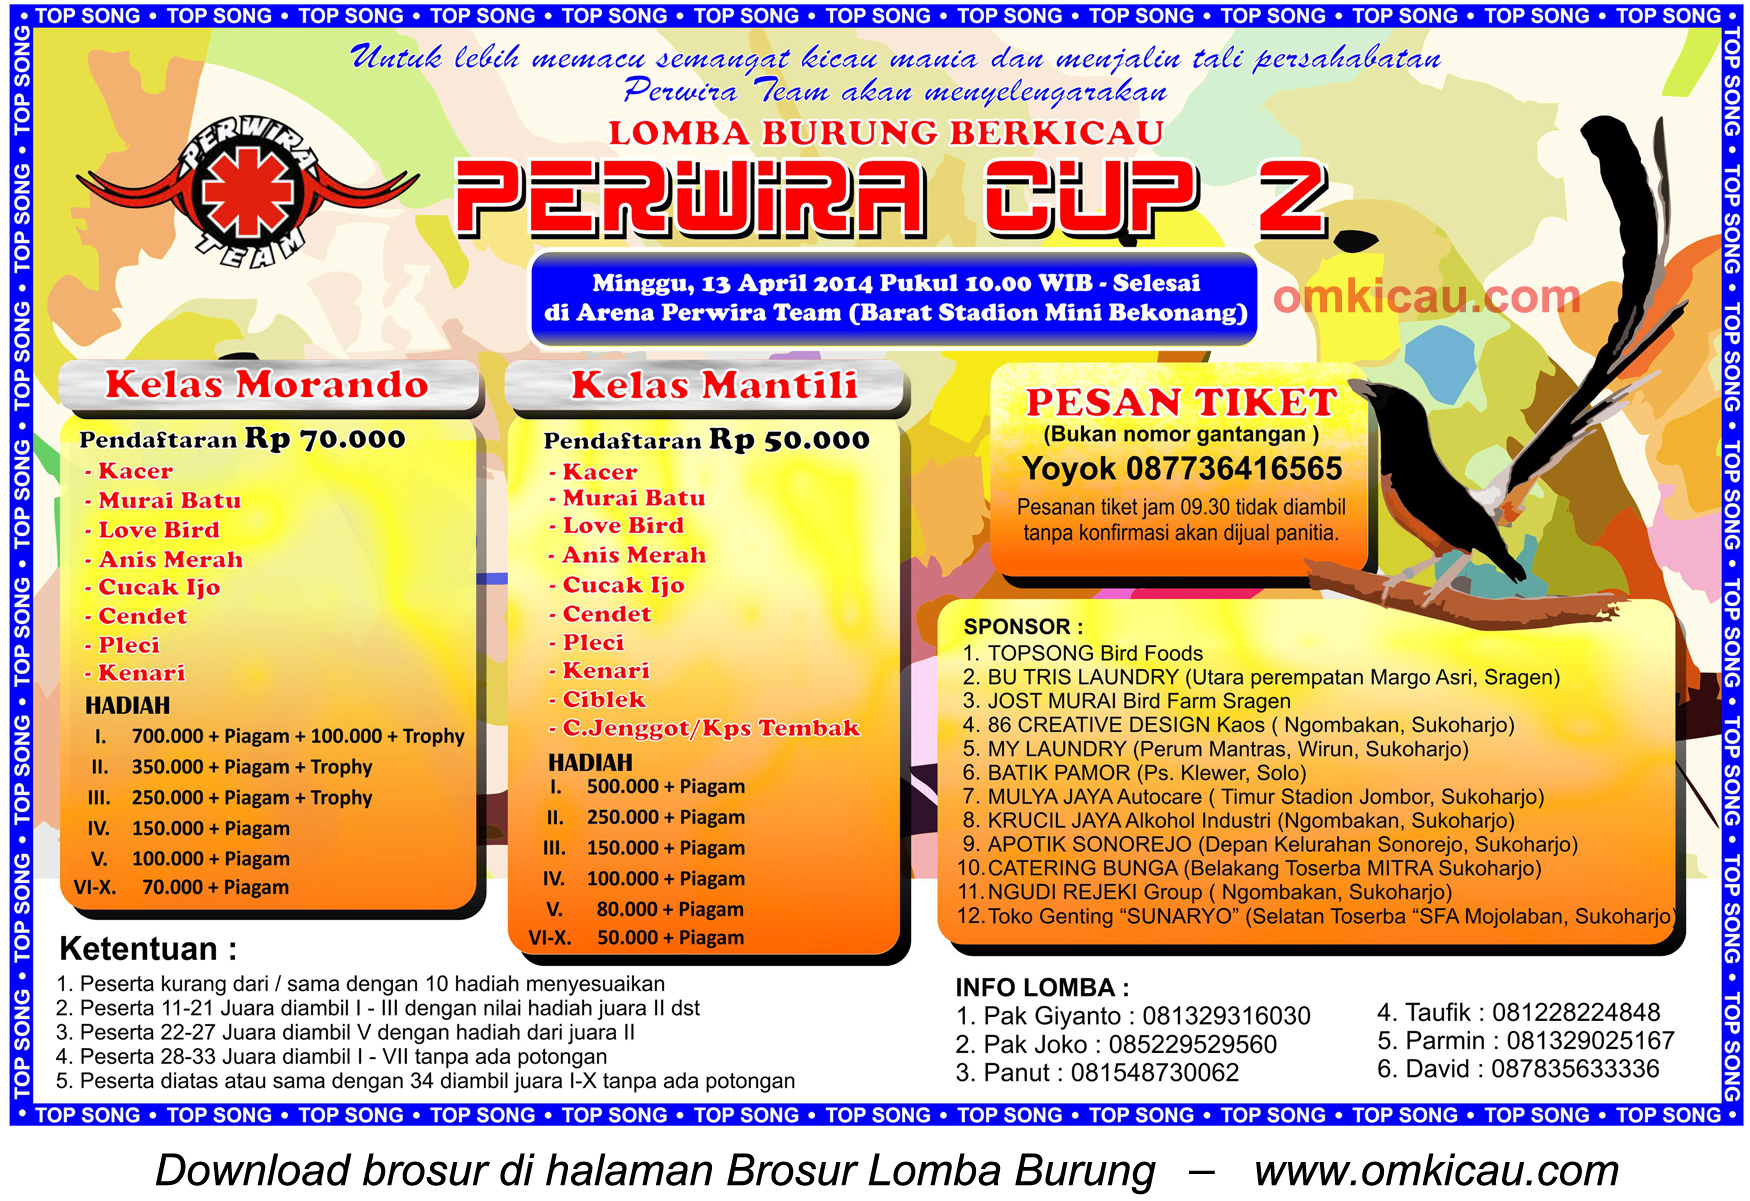 Brosur Lomba Burung Berkicau Perwira Cup 2, Sragen, 13 April 2014